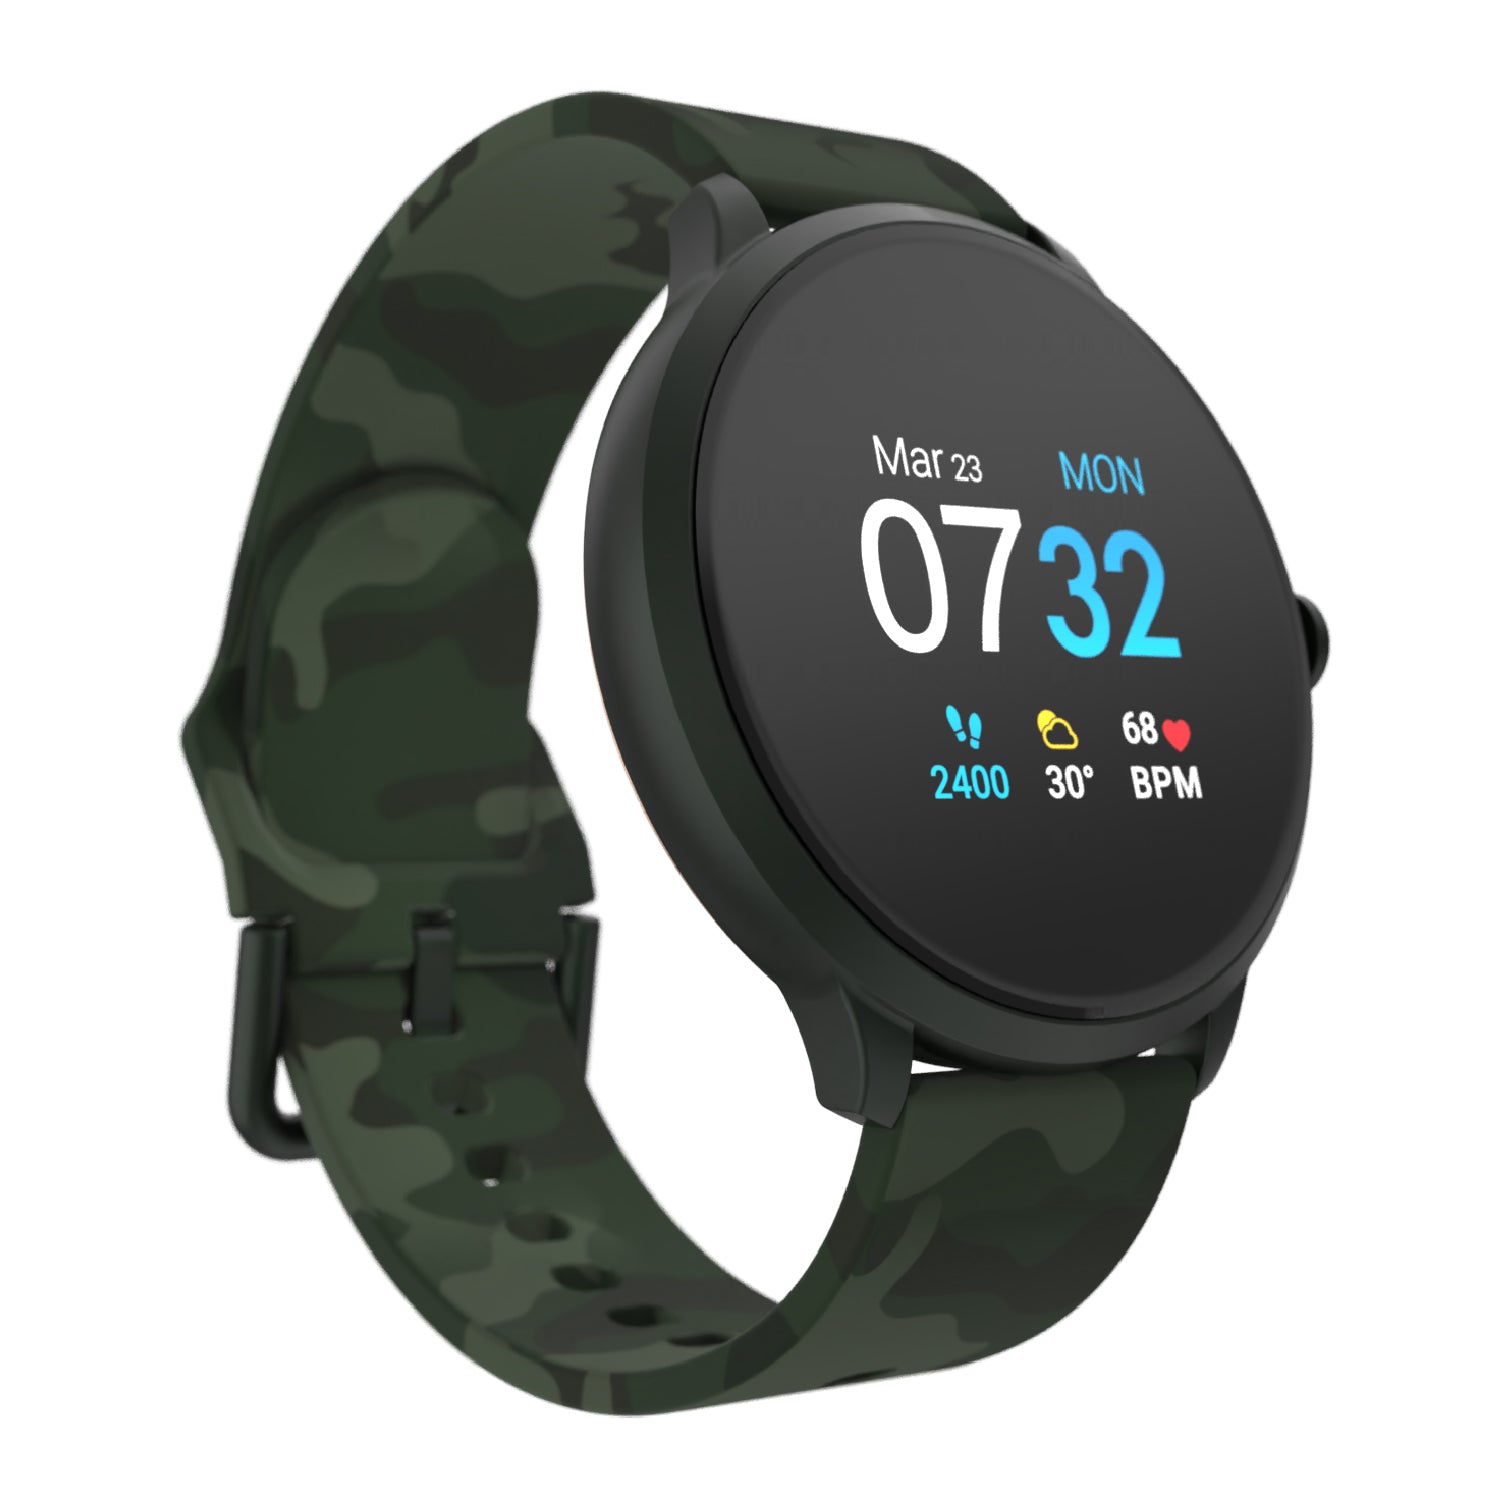 iTouch Sport 3 Smartwatch in Dark Green Camo